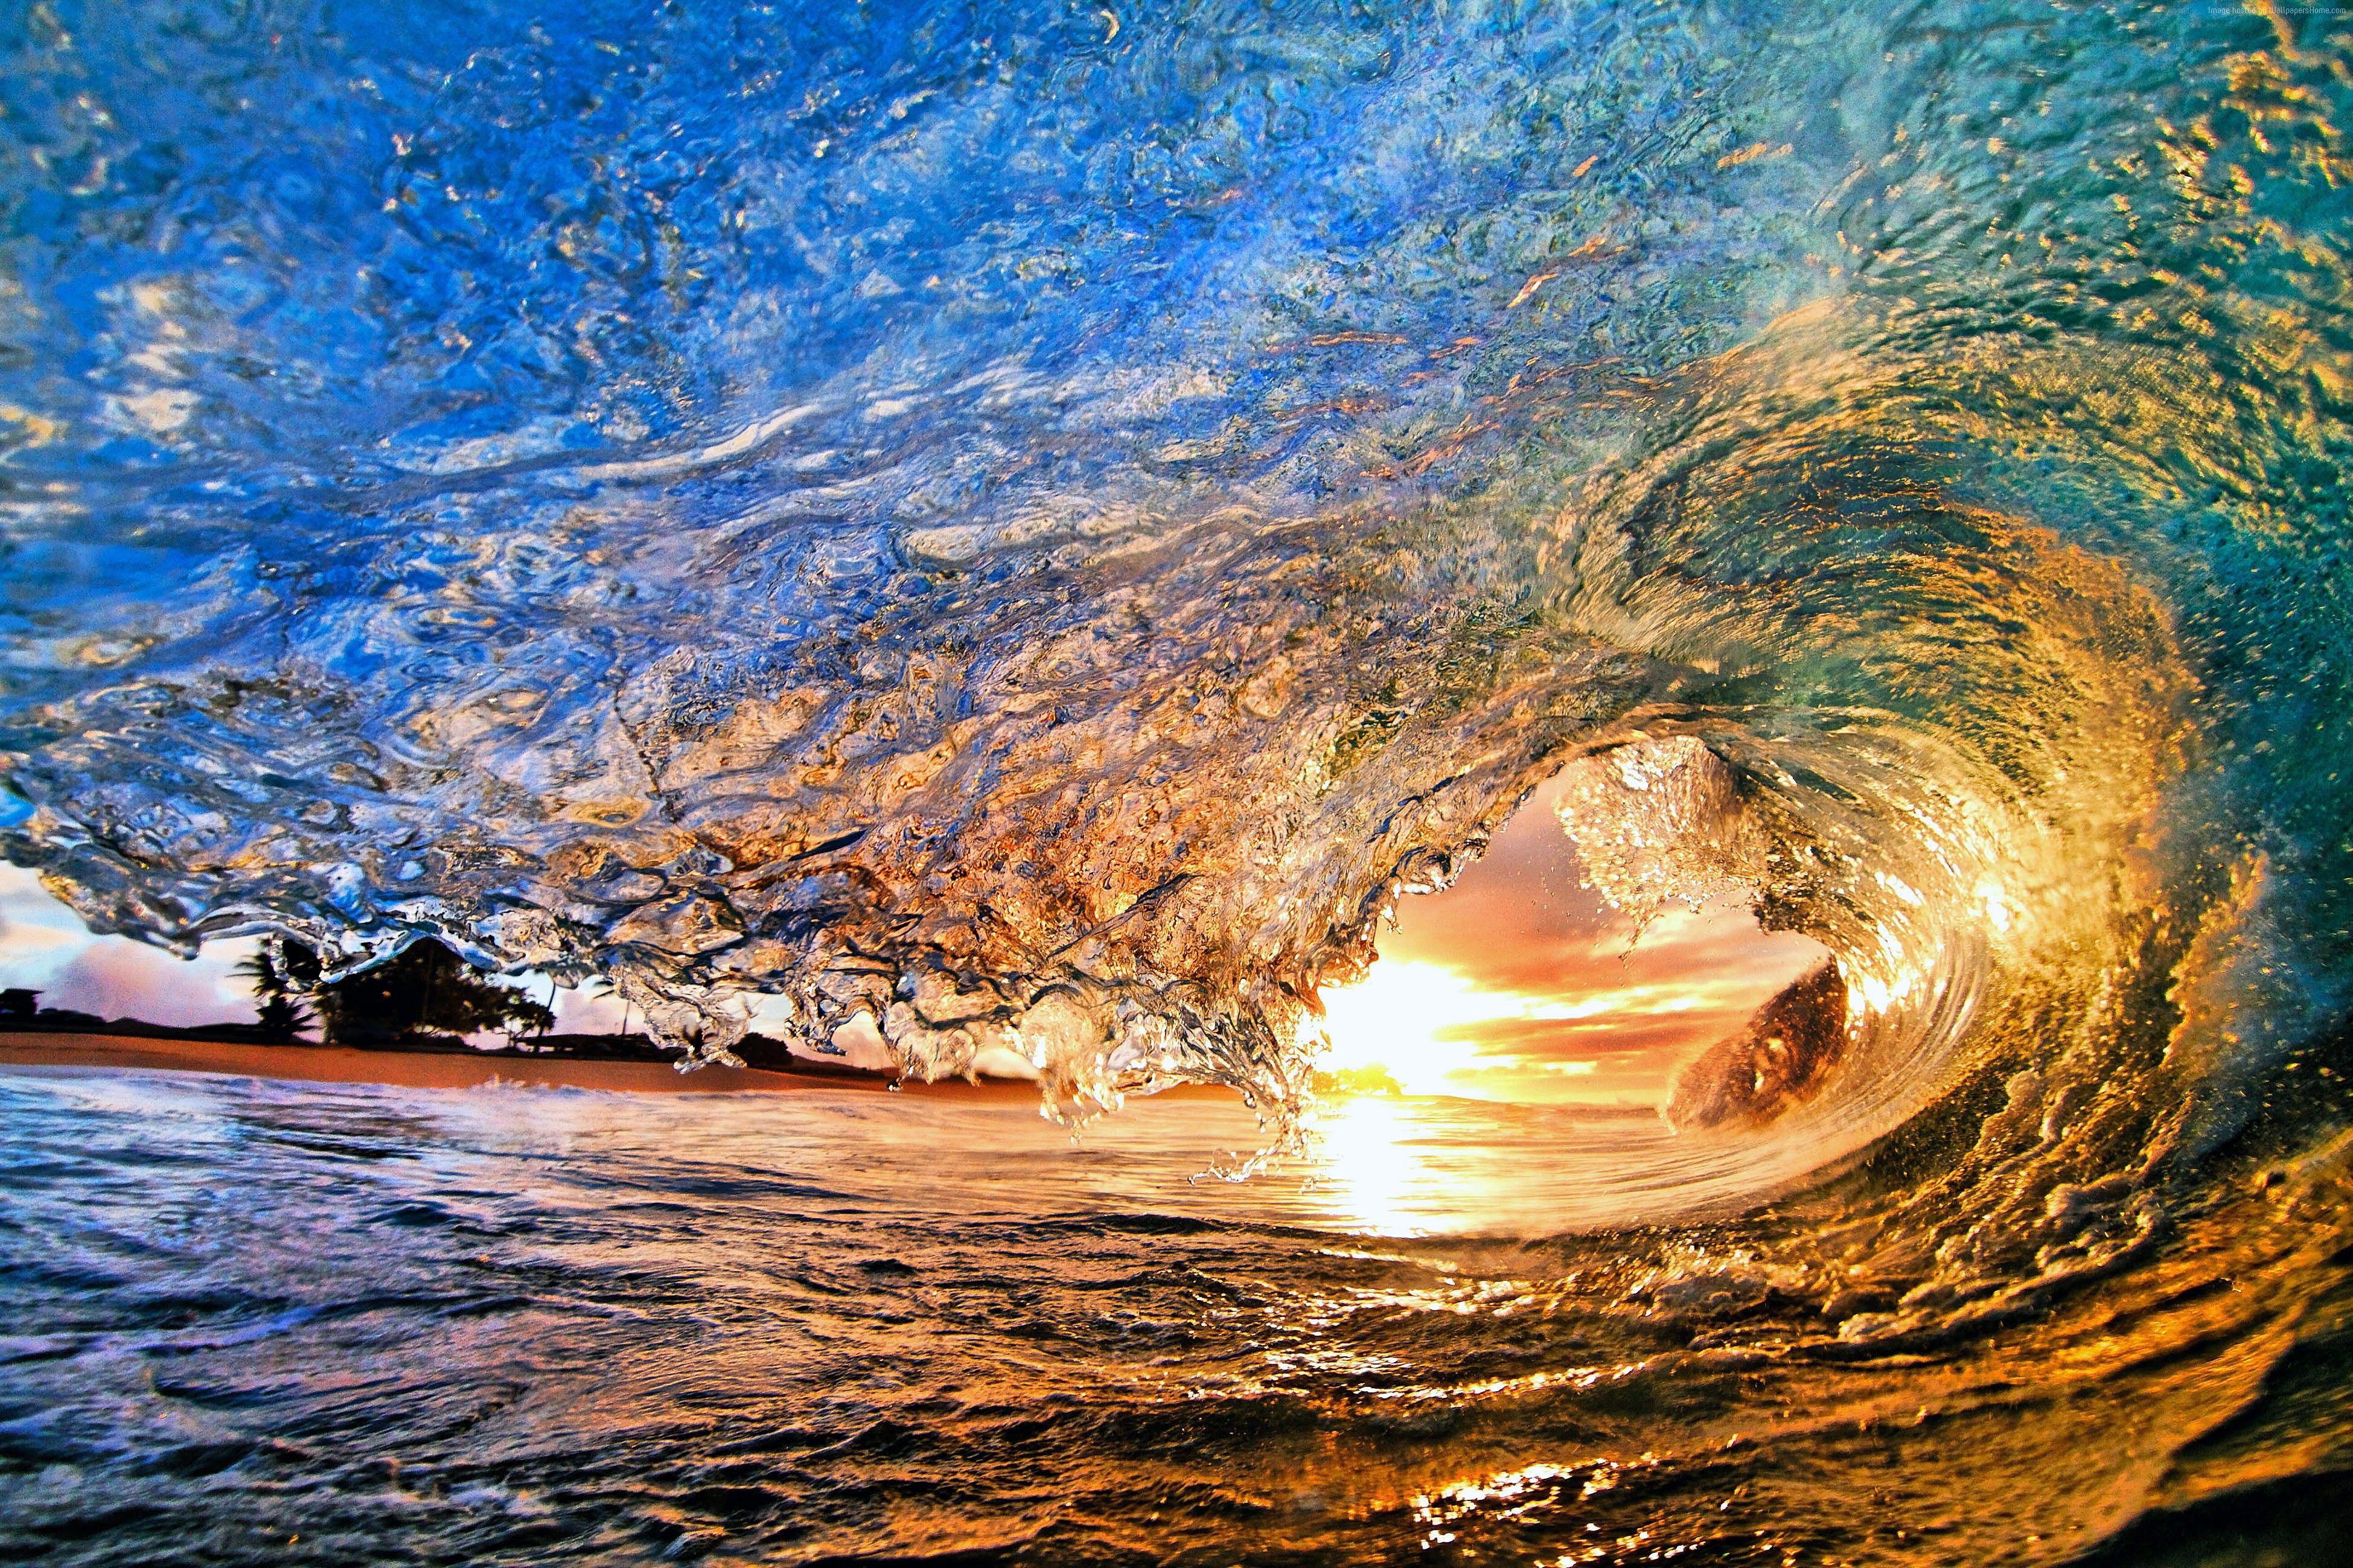 100 Ocean Wave Pictures Stunning  Download Free Images on Unsplash